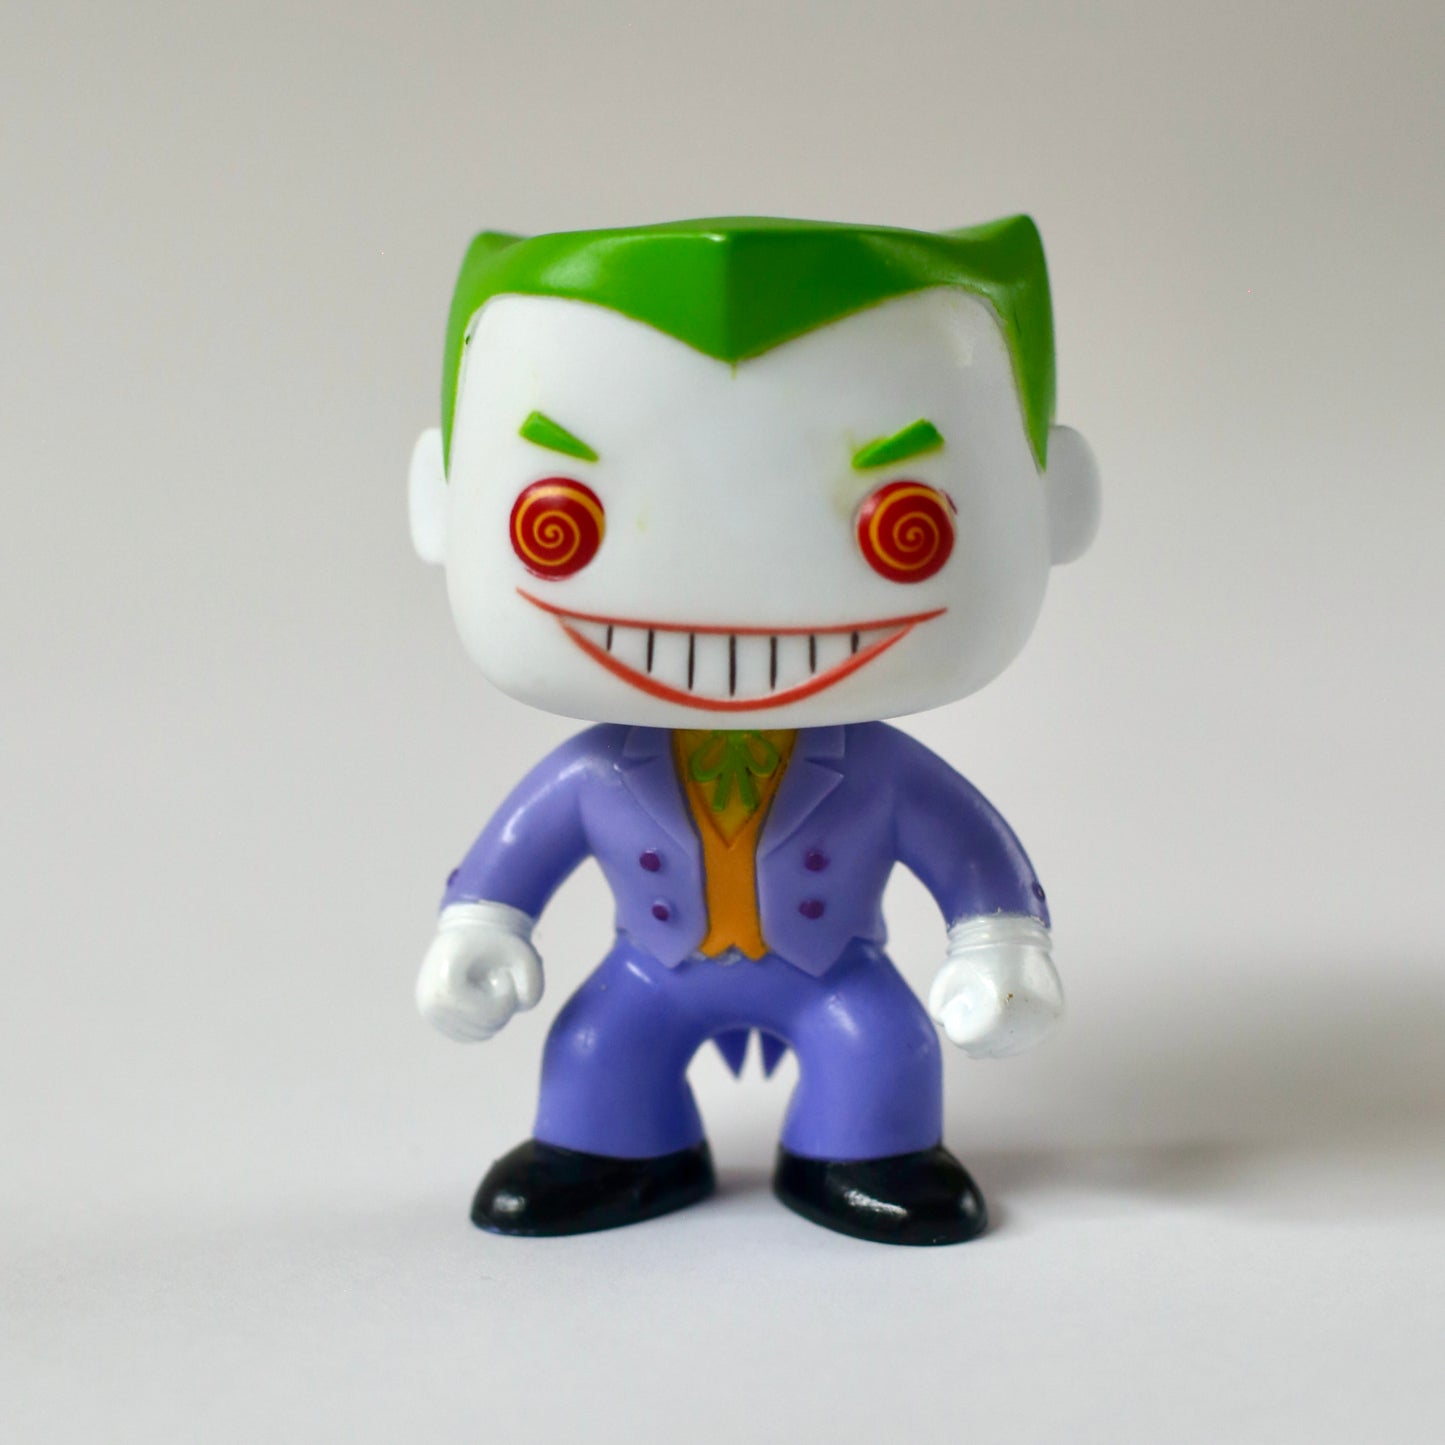 "The Joker" #06 Funko Pop Vinyl Figure